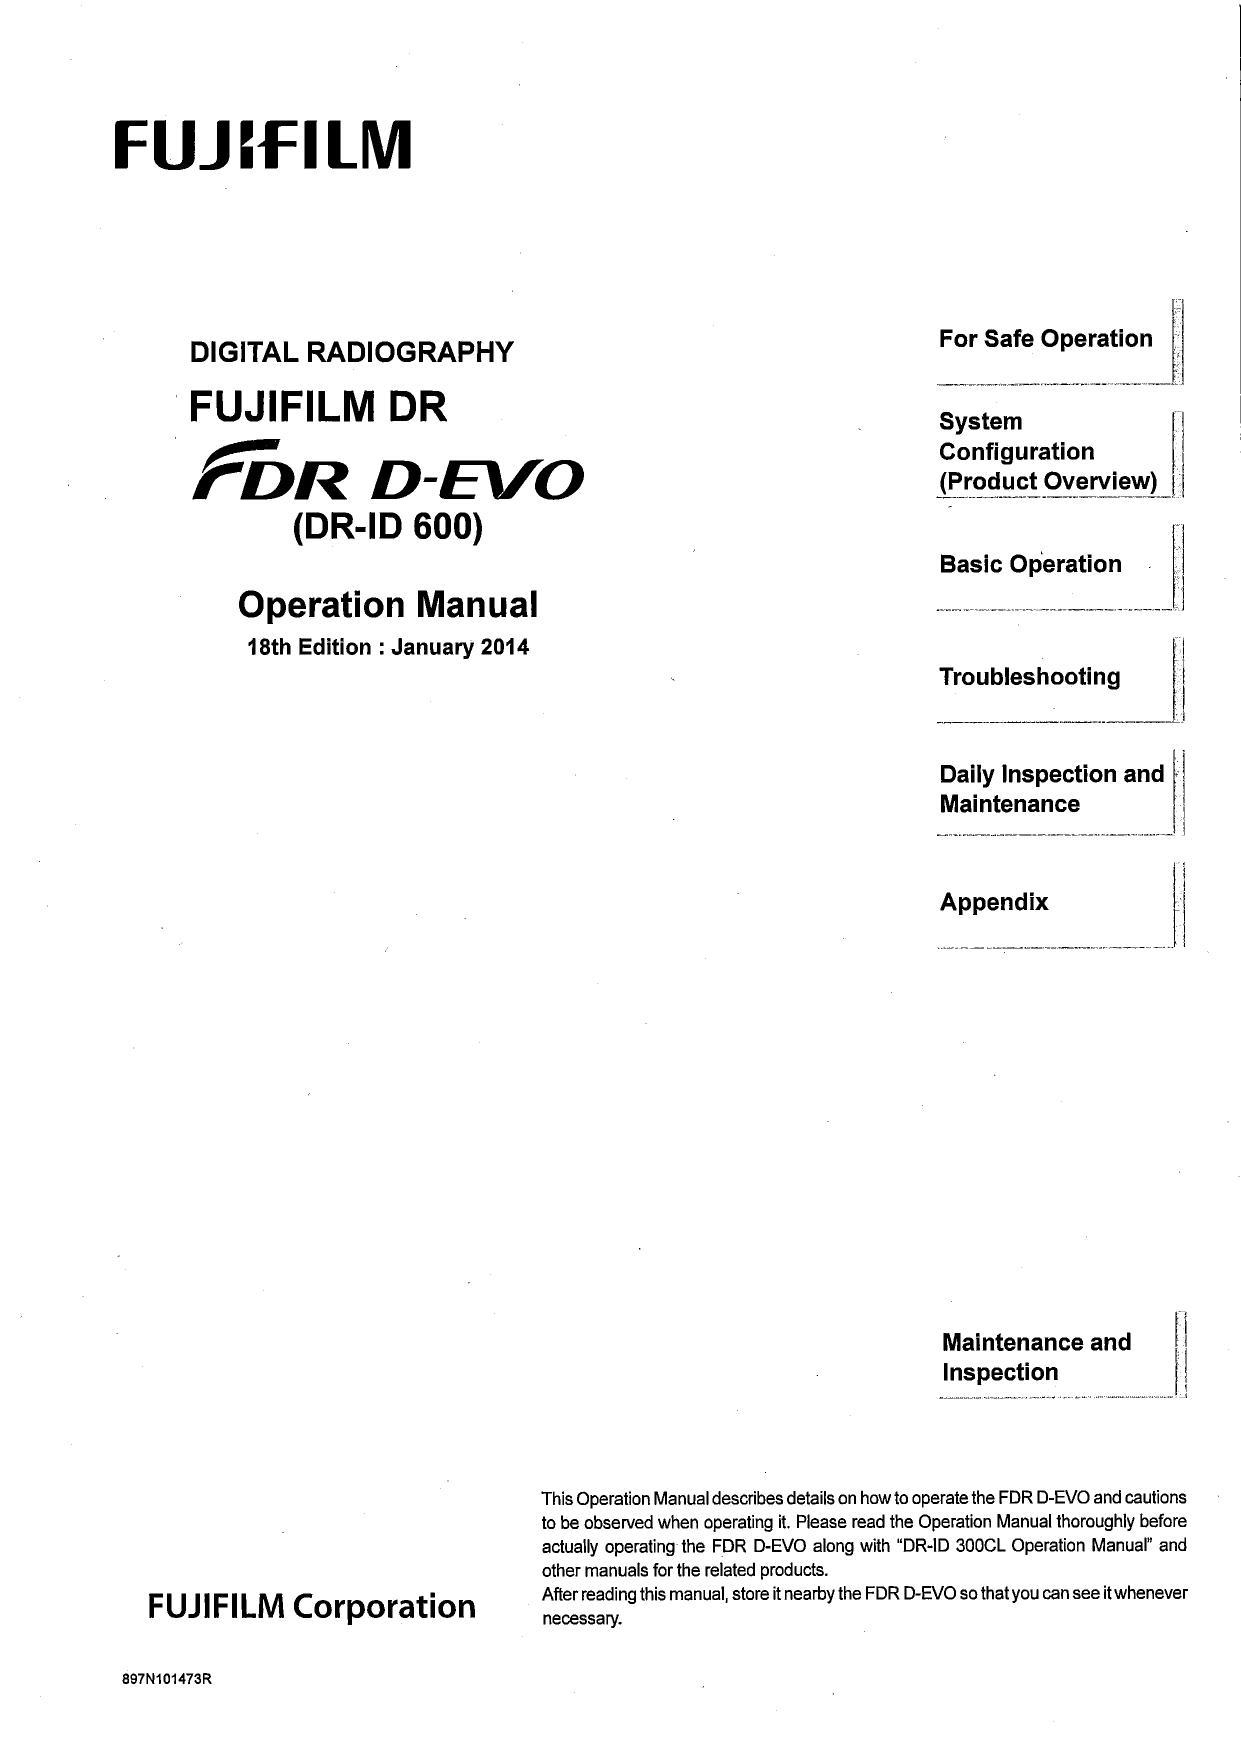 fujifilm-digital-radiography-fdr-d-evo-dr-id-600-operation-manual.pdf